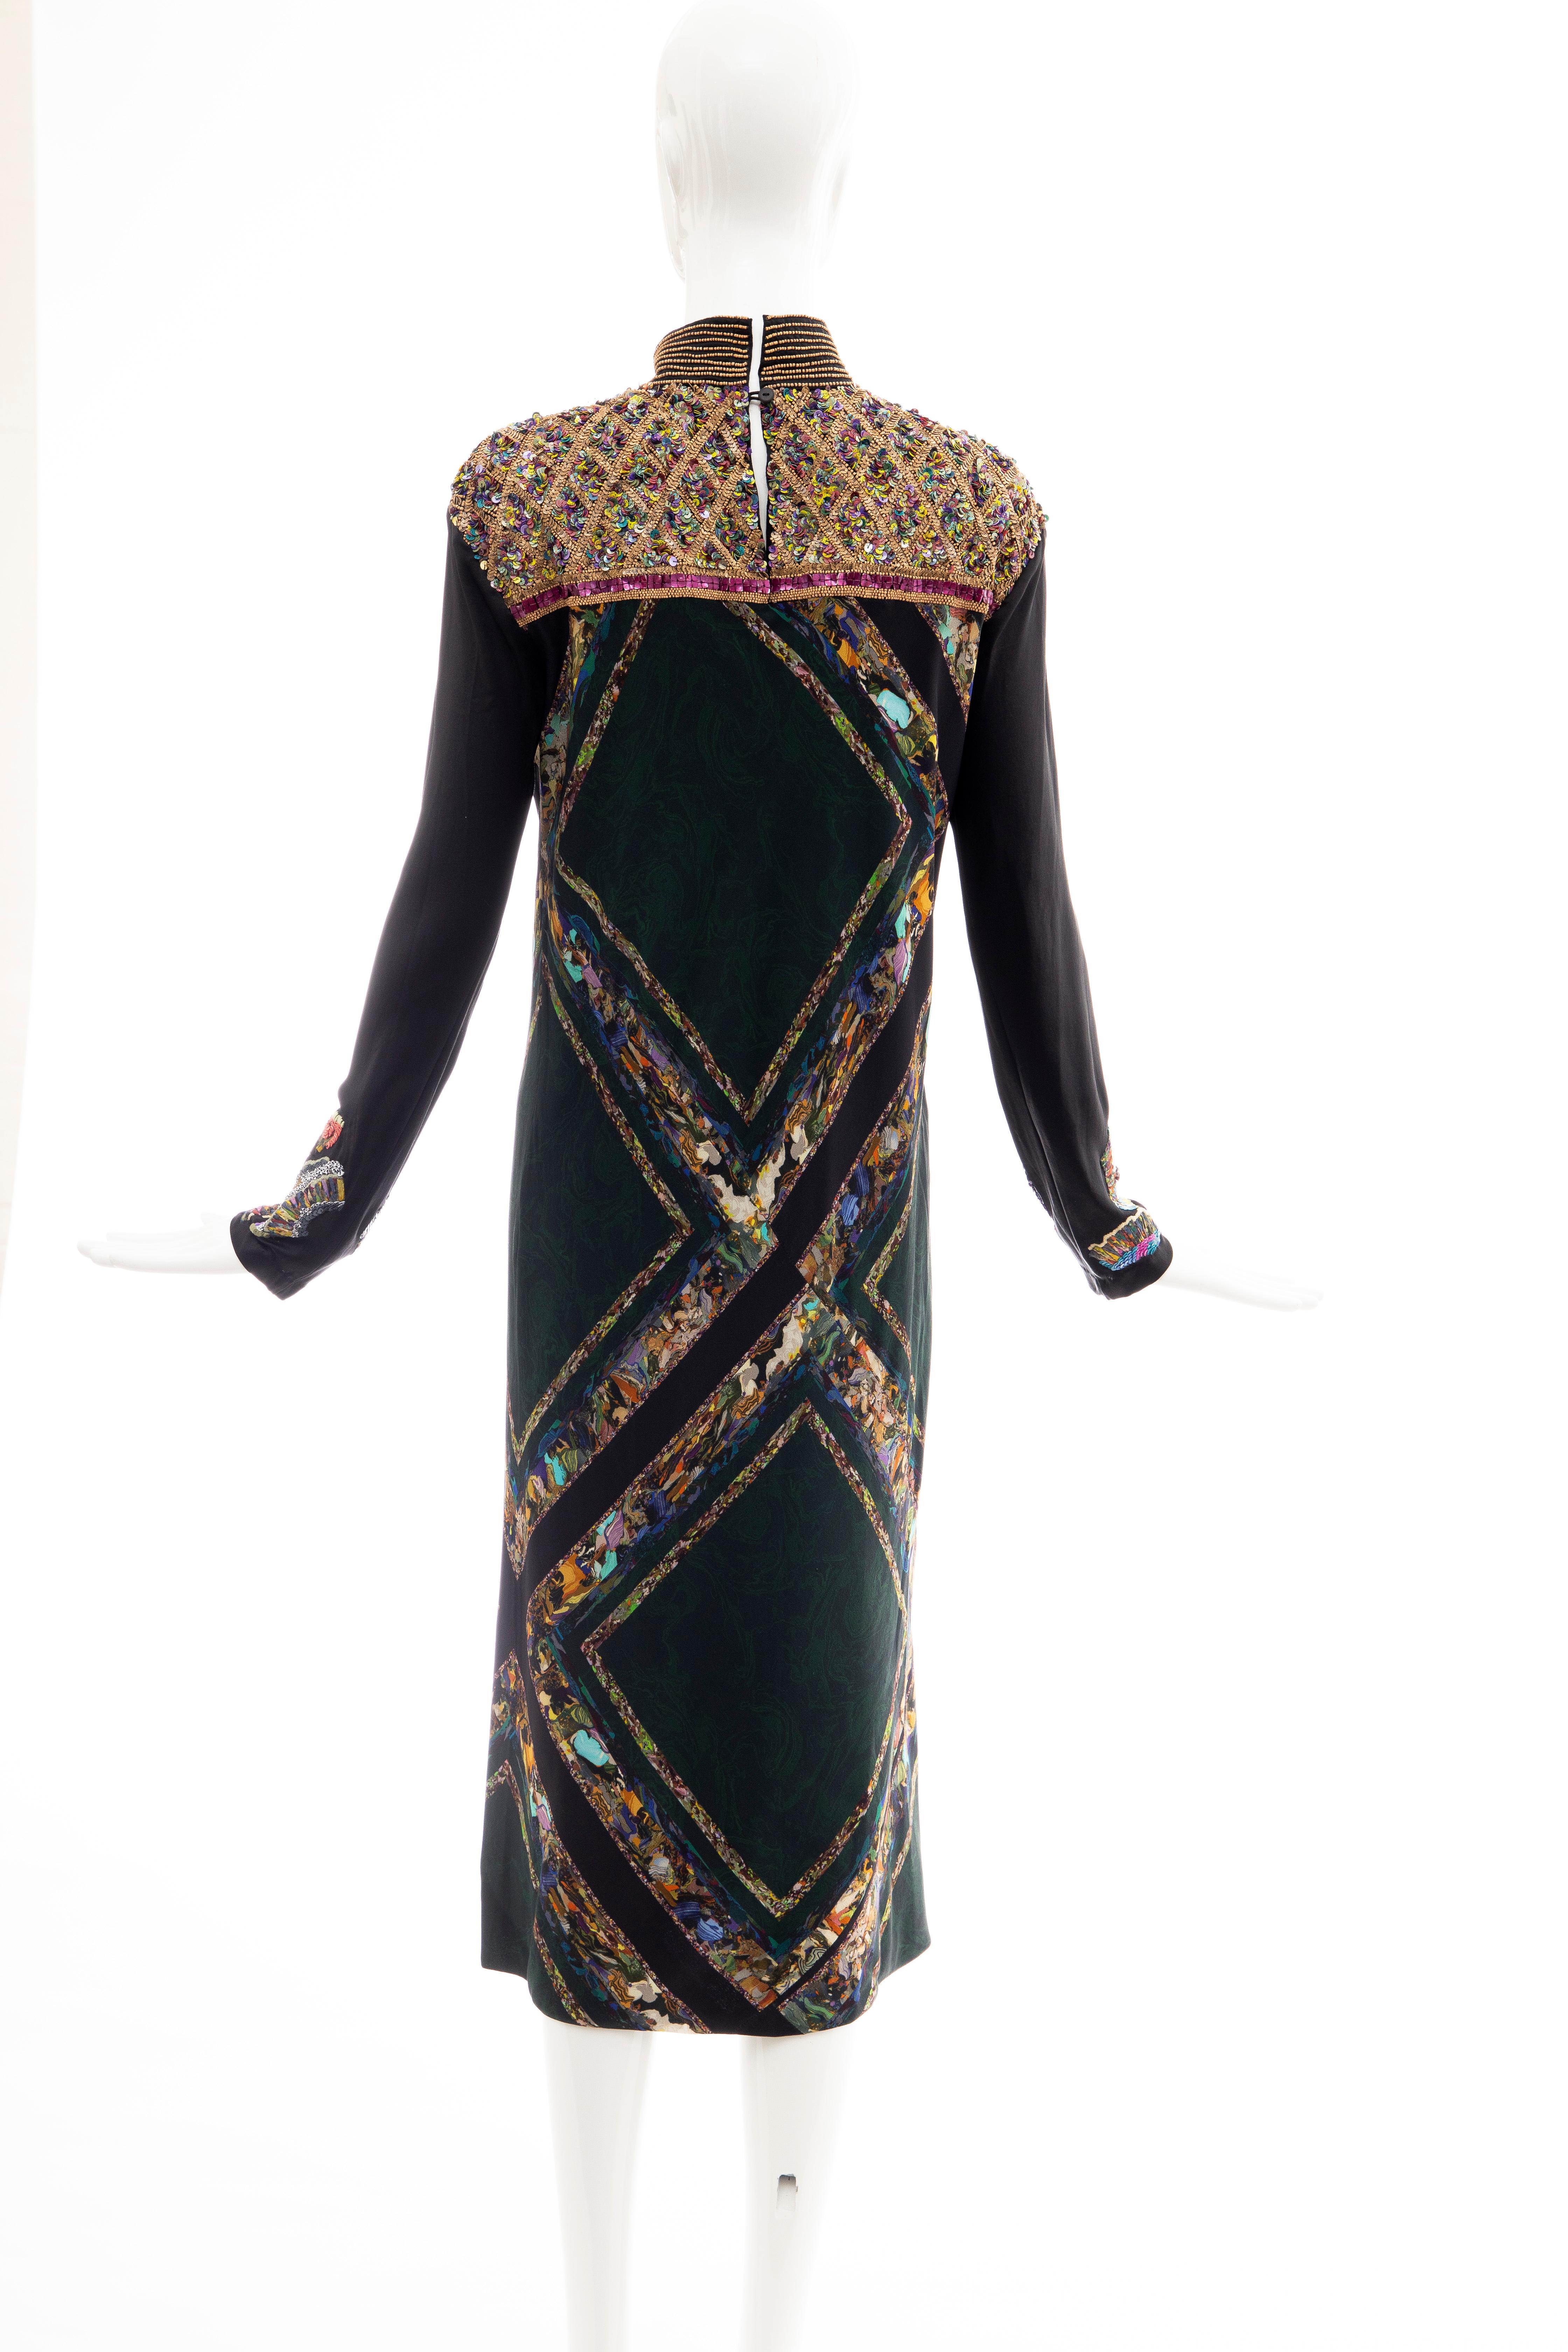 Dries van Noten Runway Bead & Sequin Embroidery Silk Printed Dress, Fall 2008 2